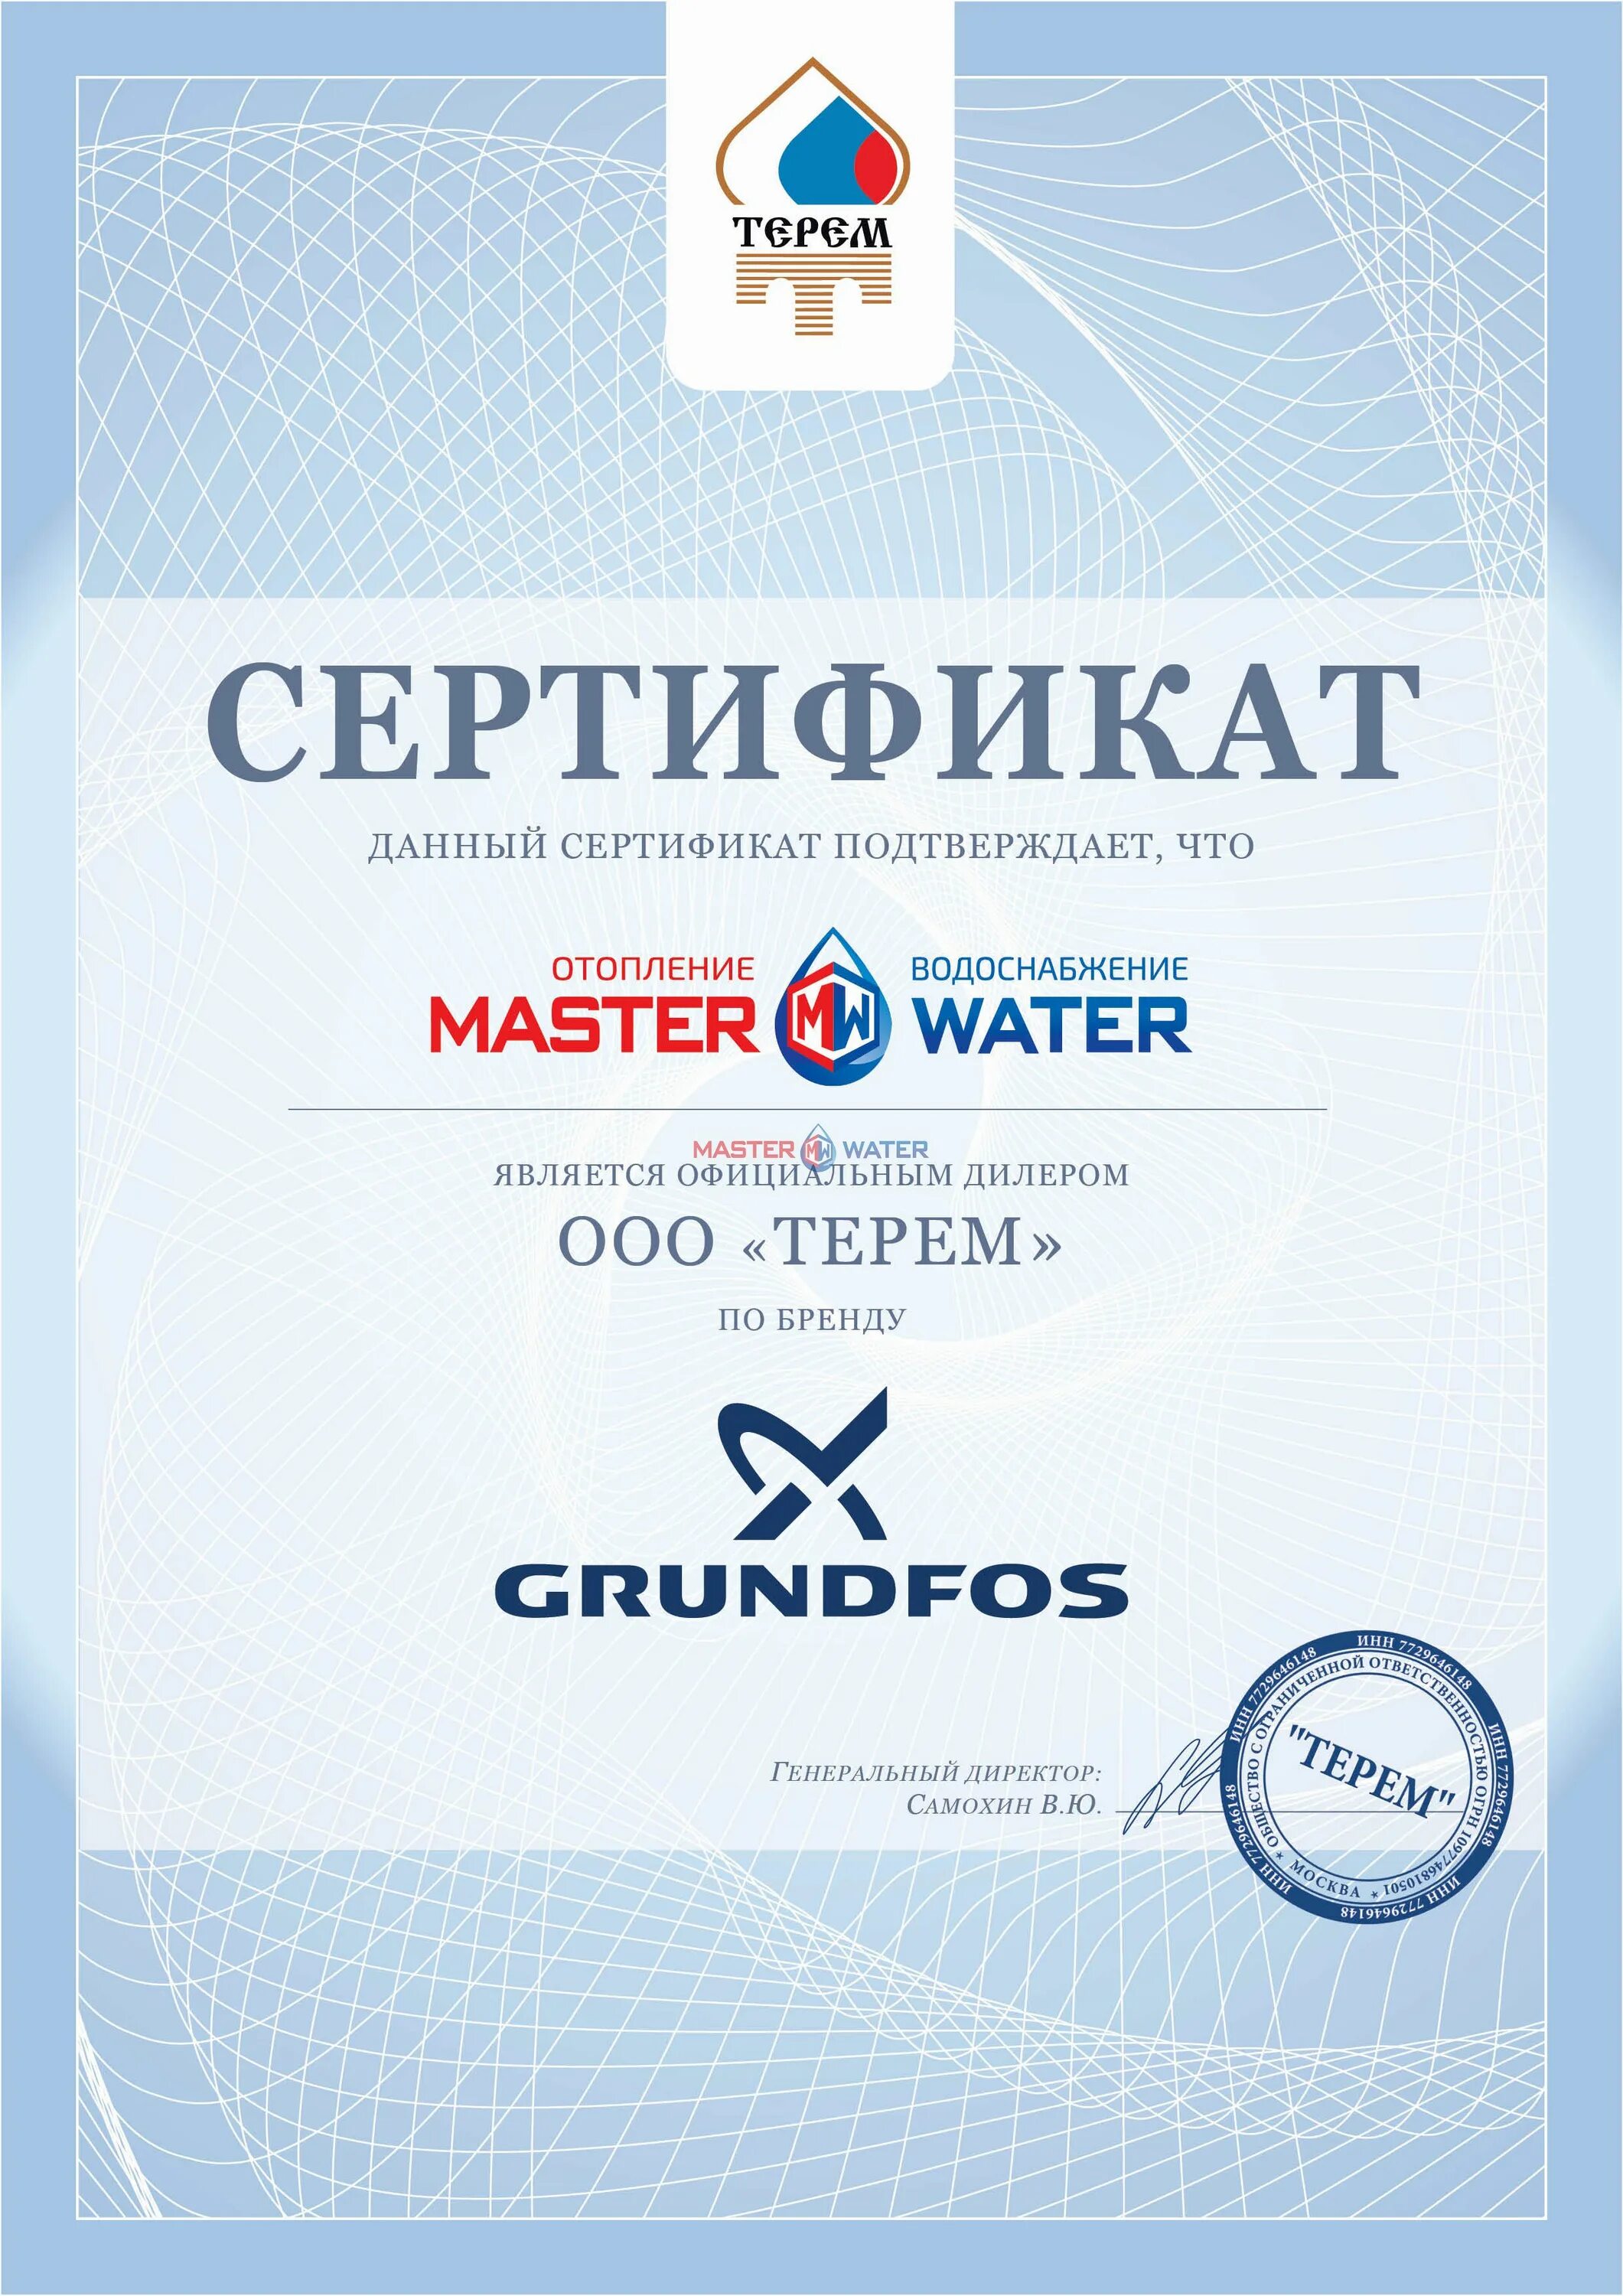 Master water. Мастер Ватер интернет. Отзывы о магазине Master Water. Сертификаты венгерских компаний. ООО вода- мастер.